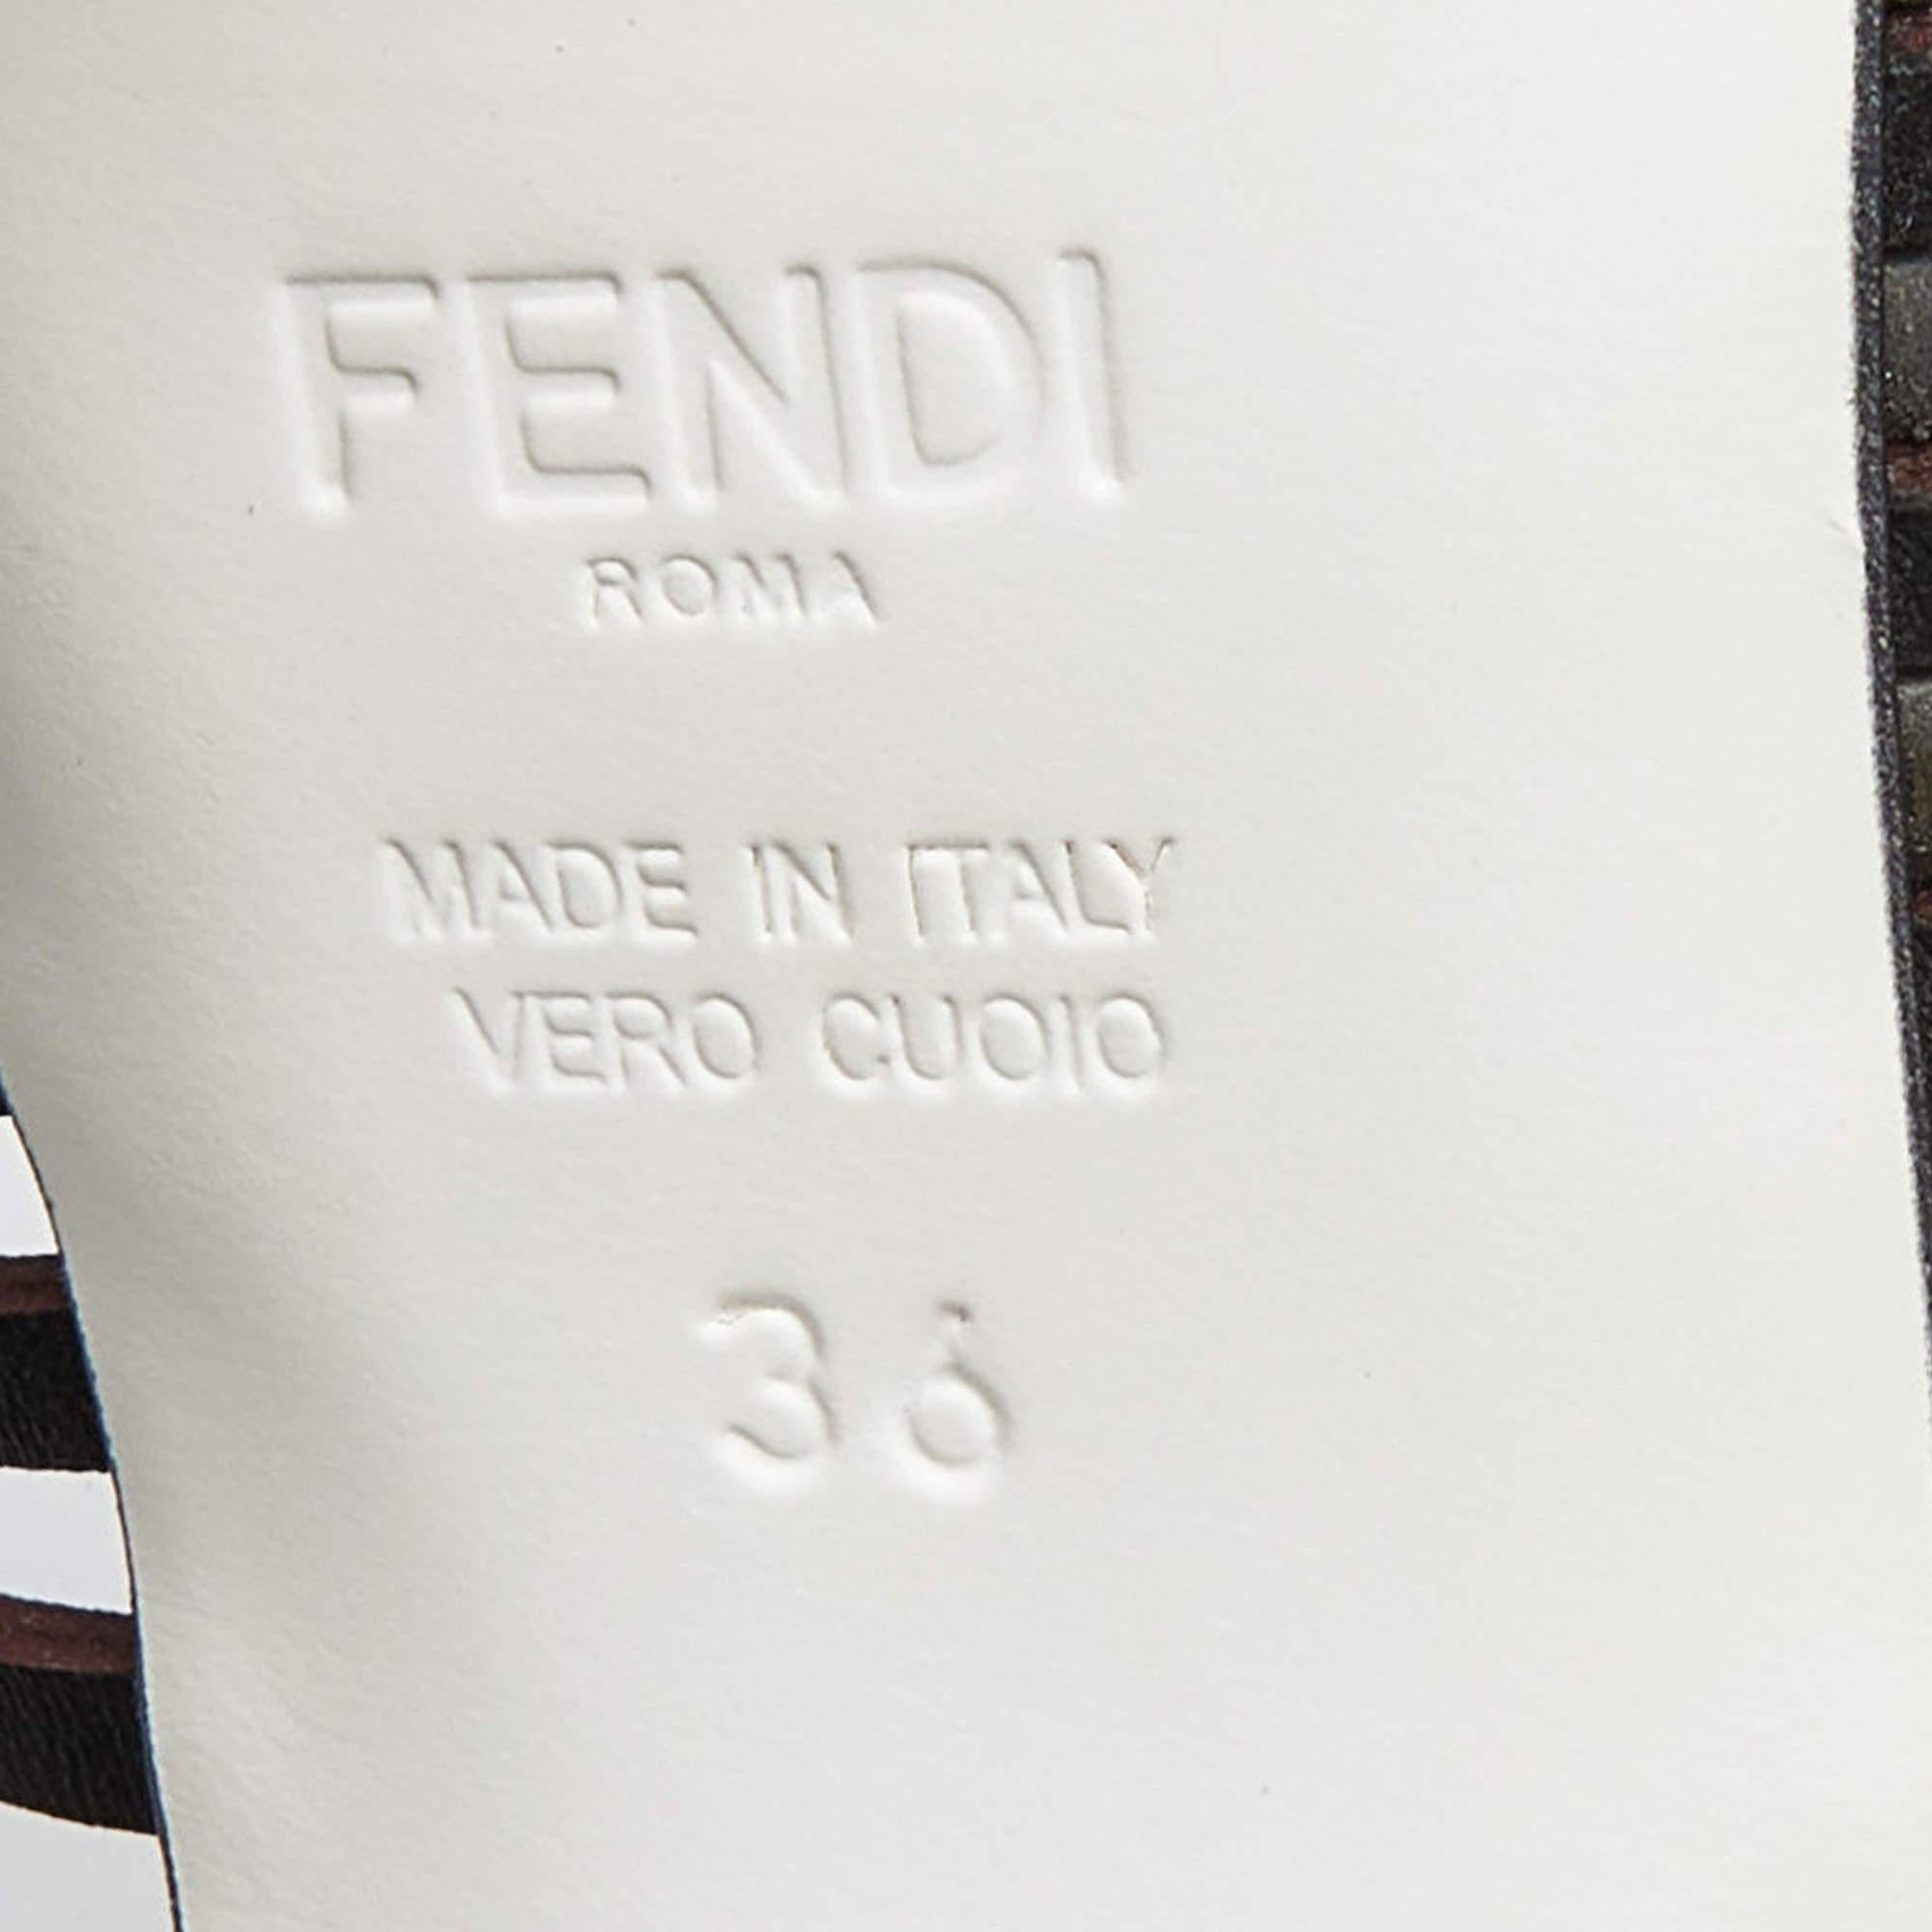 Fendi Tricolor Leather Strappy Sandals Size 36 2